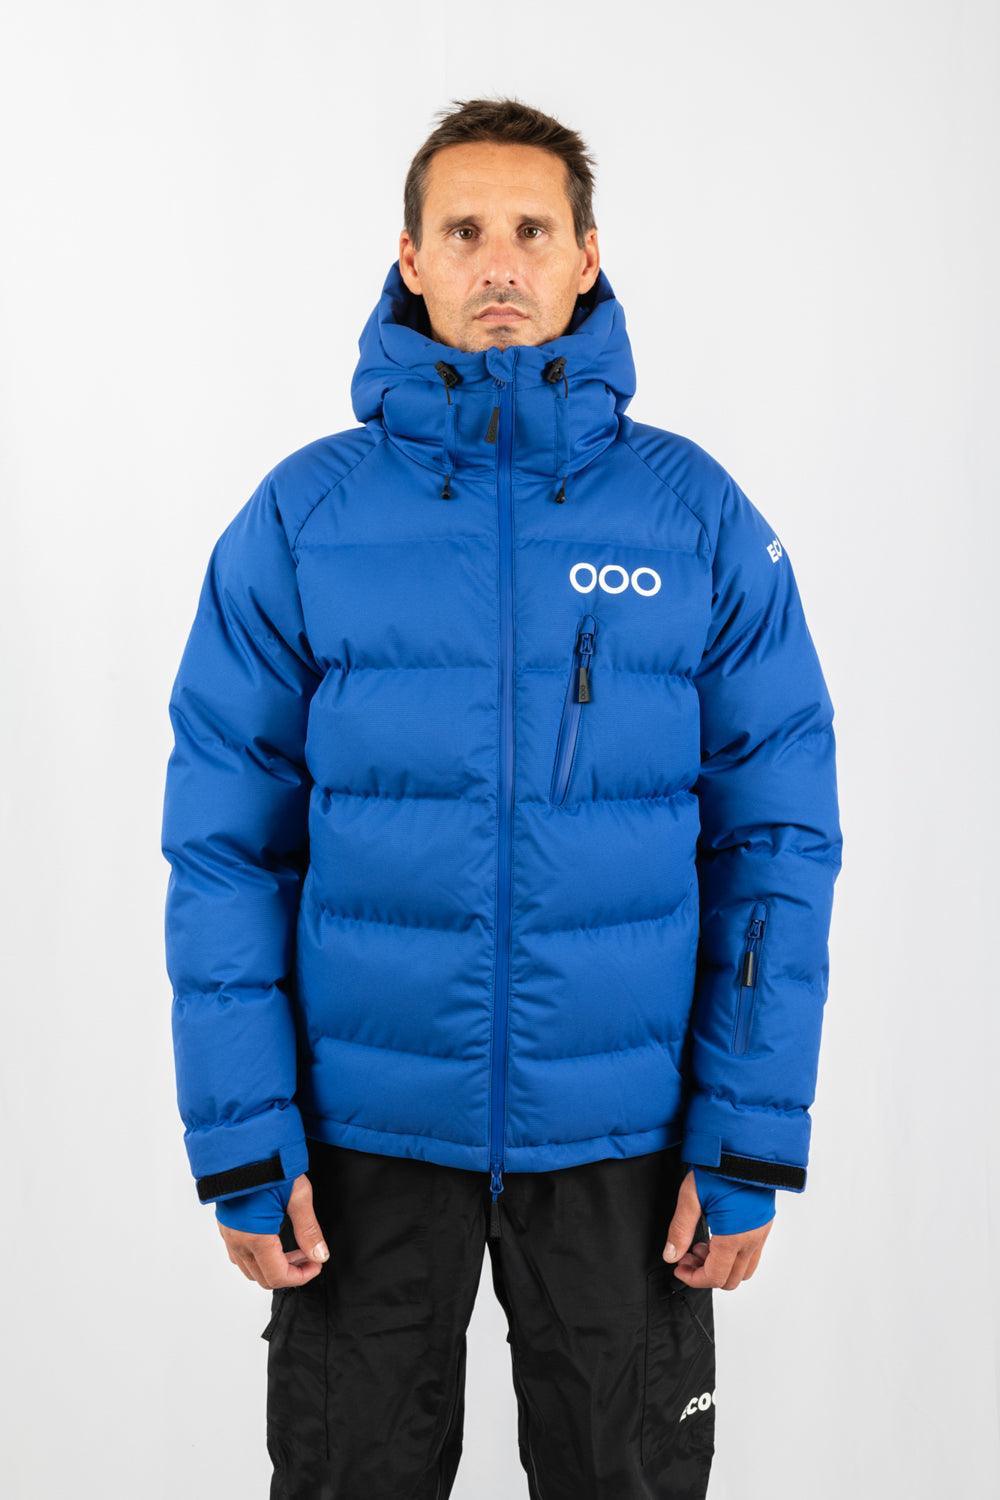 ECOON ECOTHERMO Warm Insulated Ski Veste Homme Bleu Clair